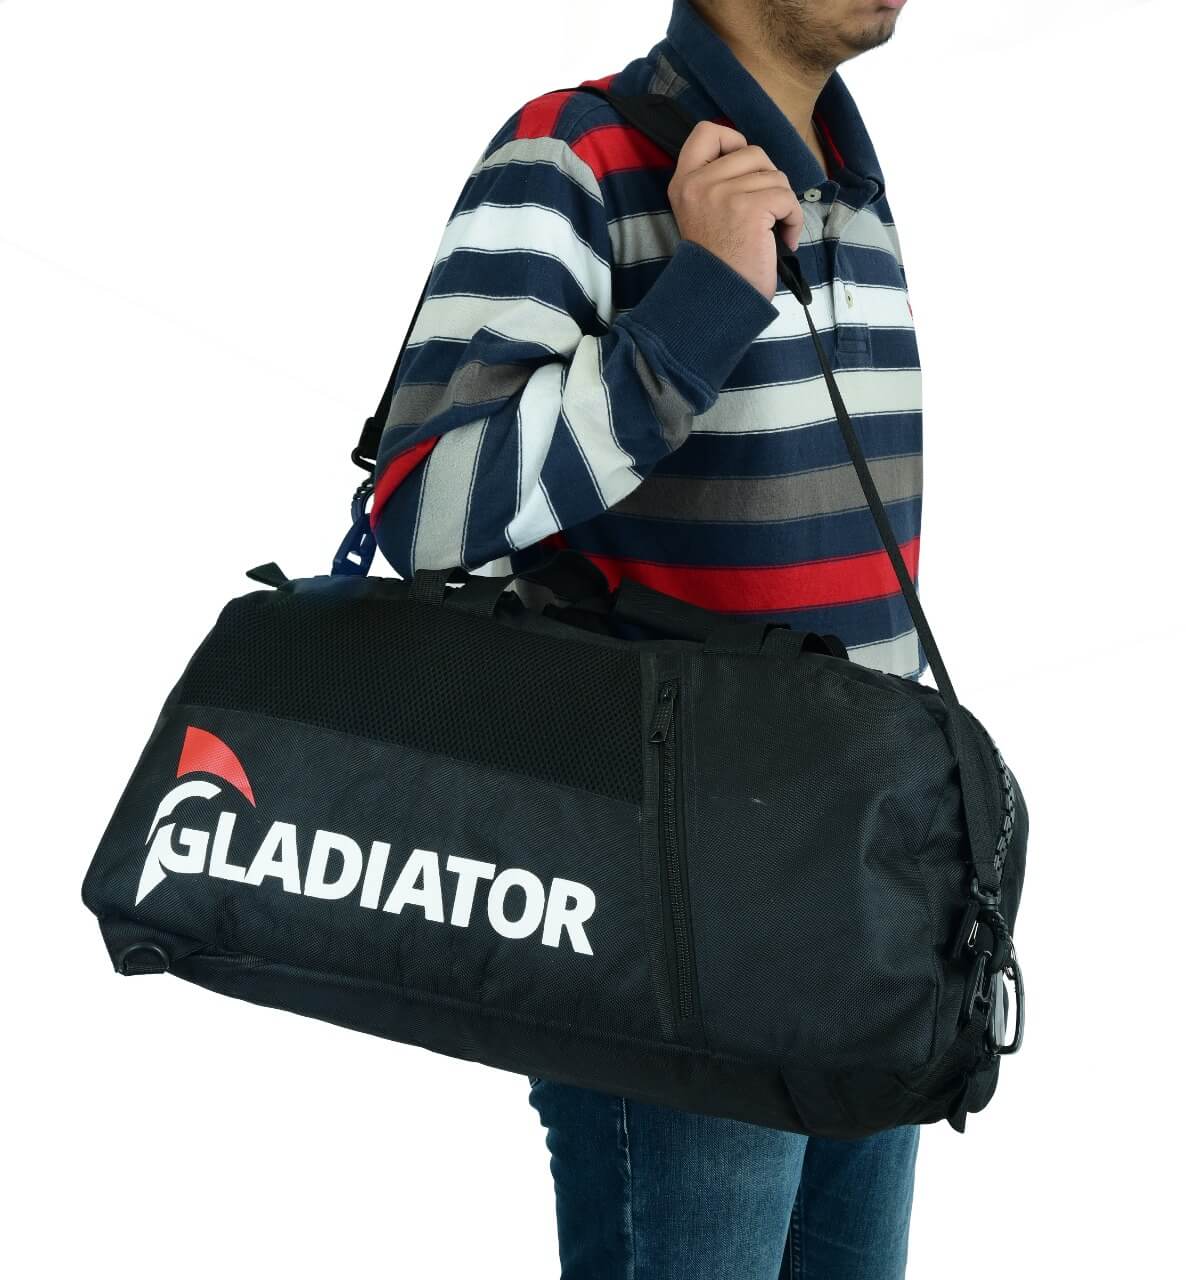 gladiator sports gym bag for sale